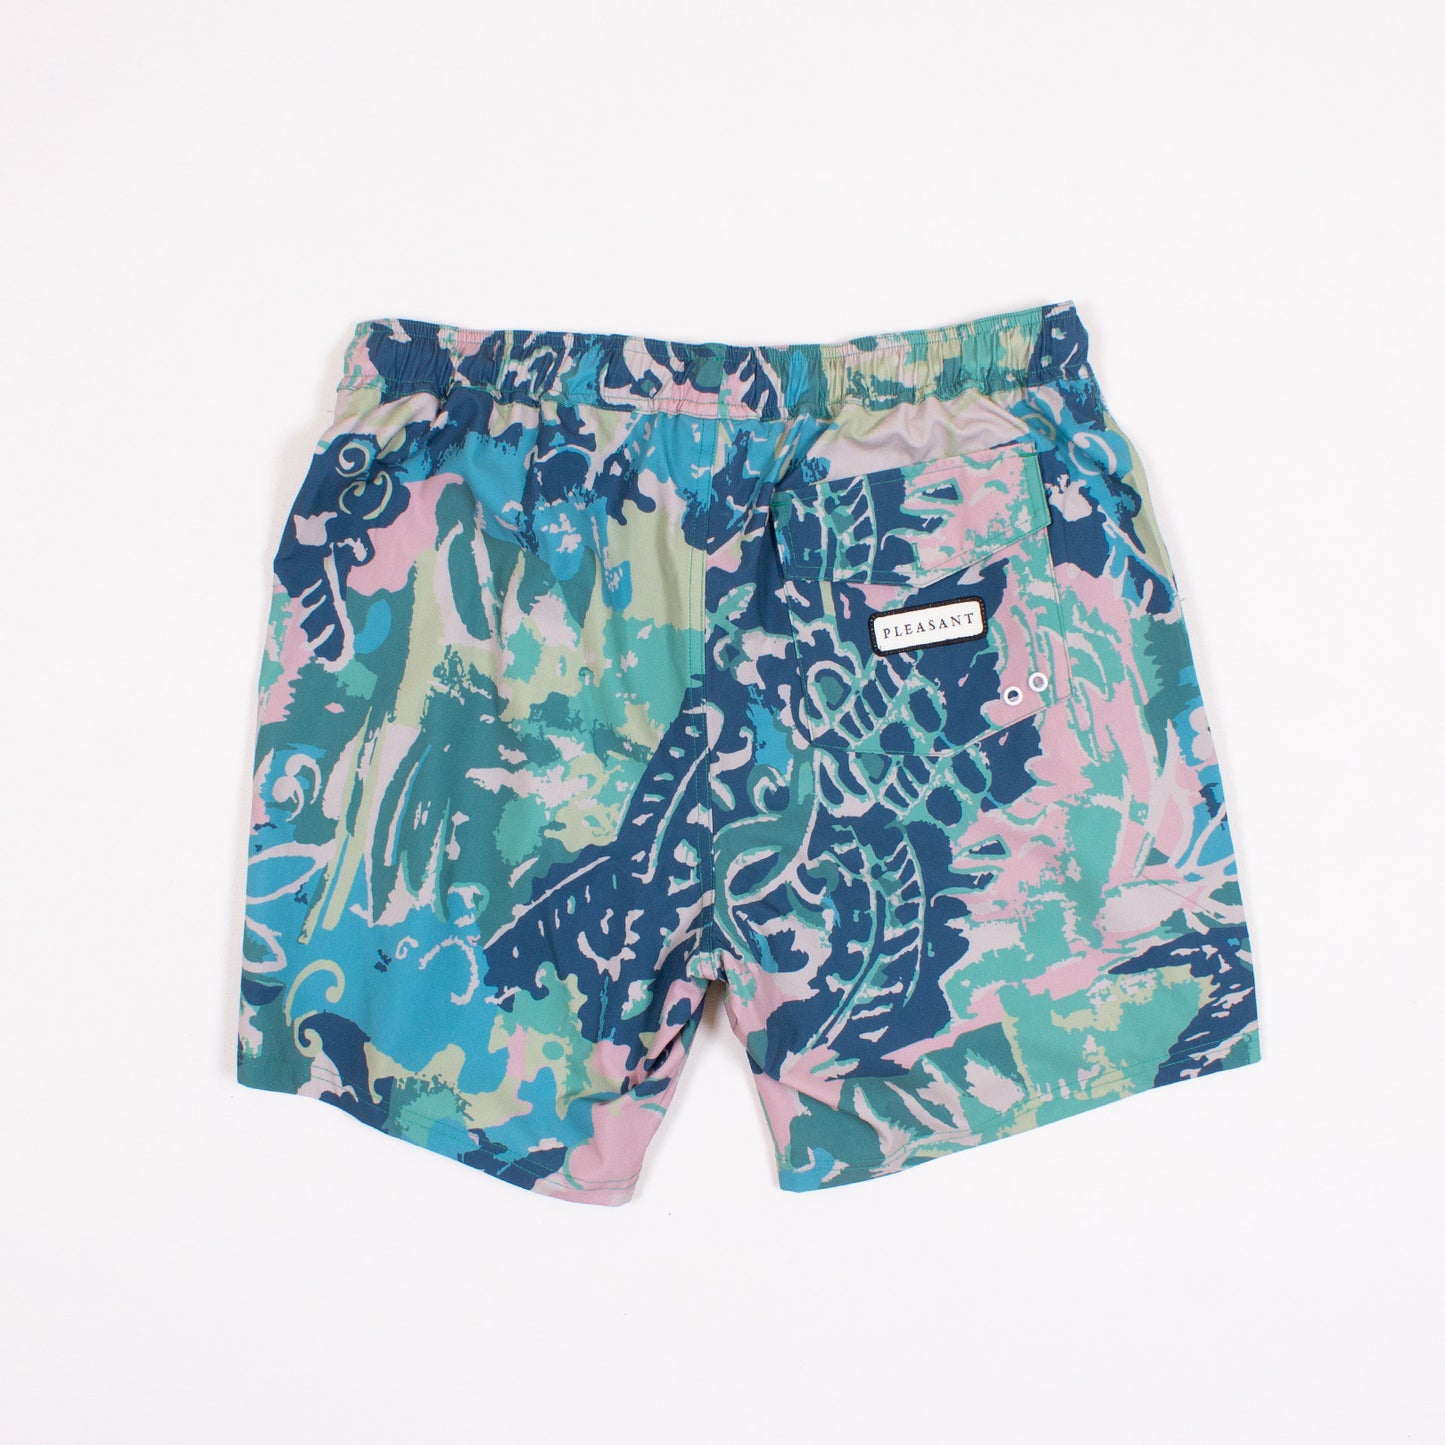 Jungle swim shorts